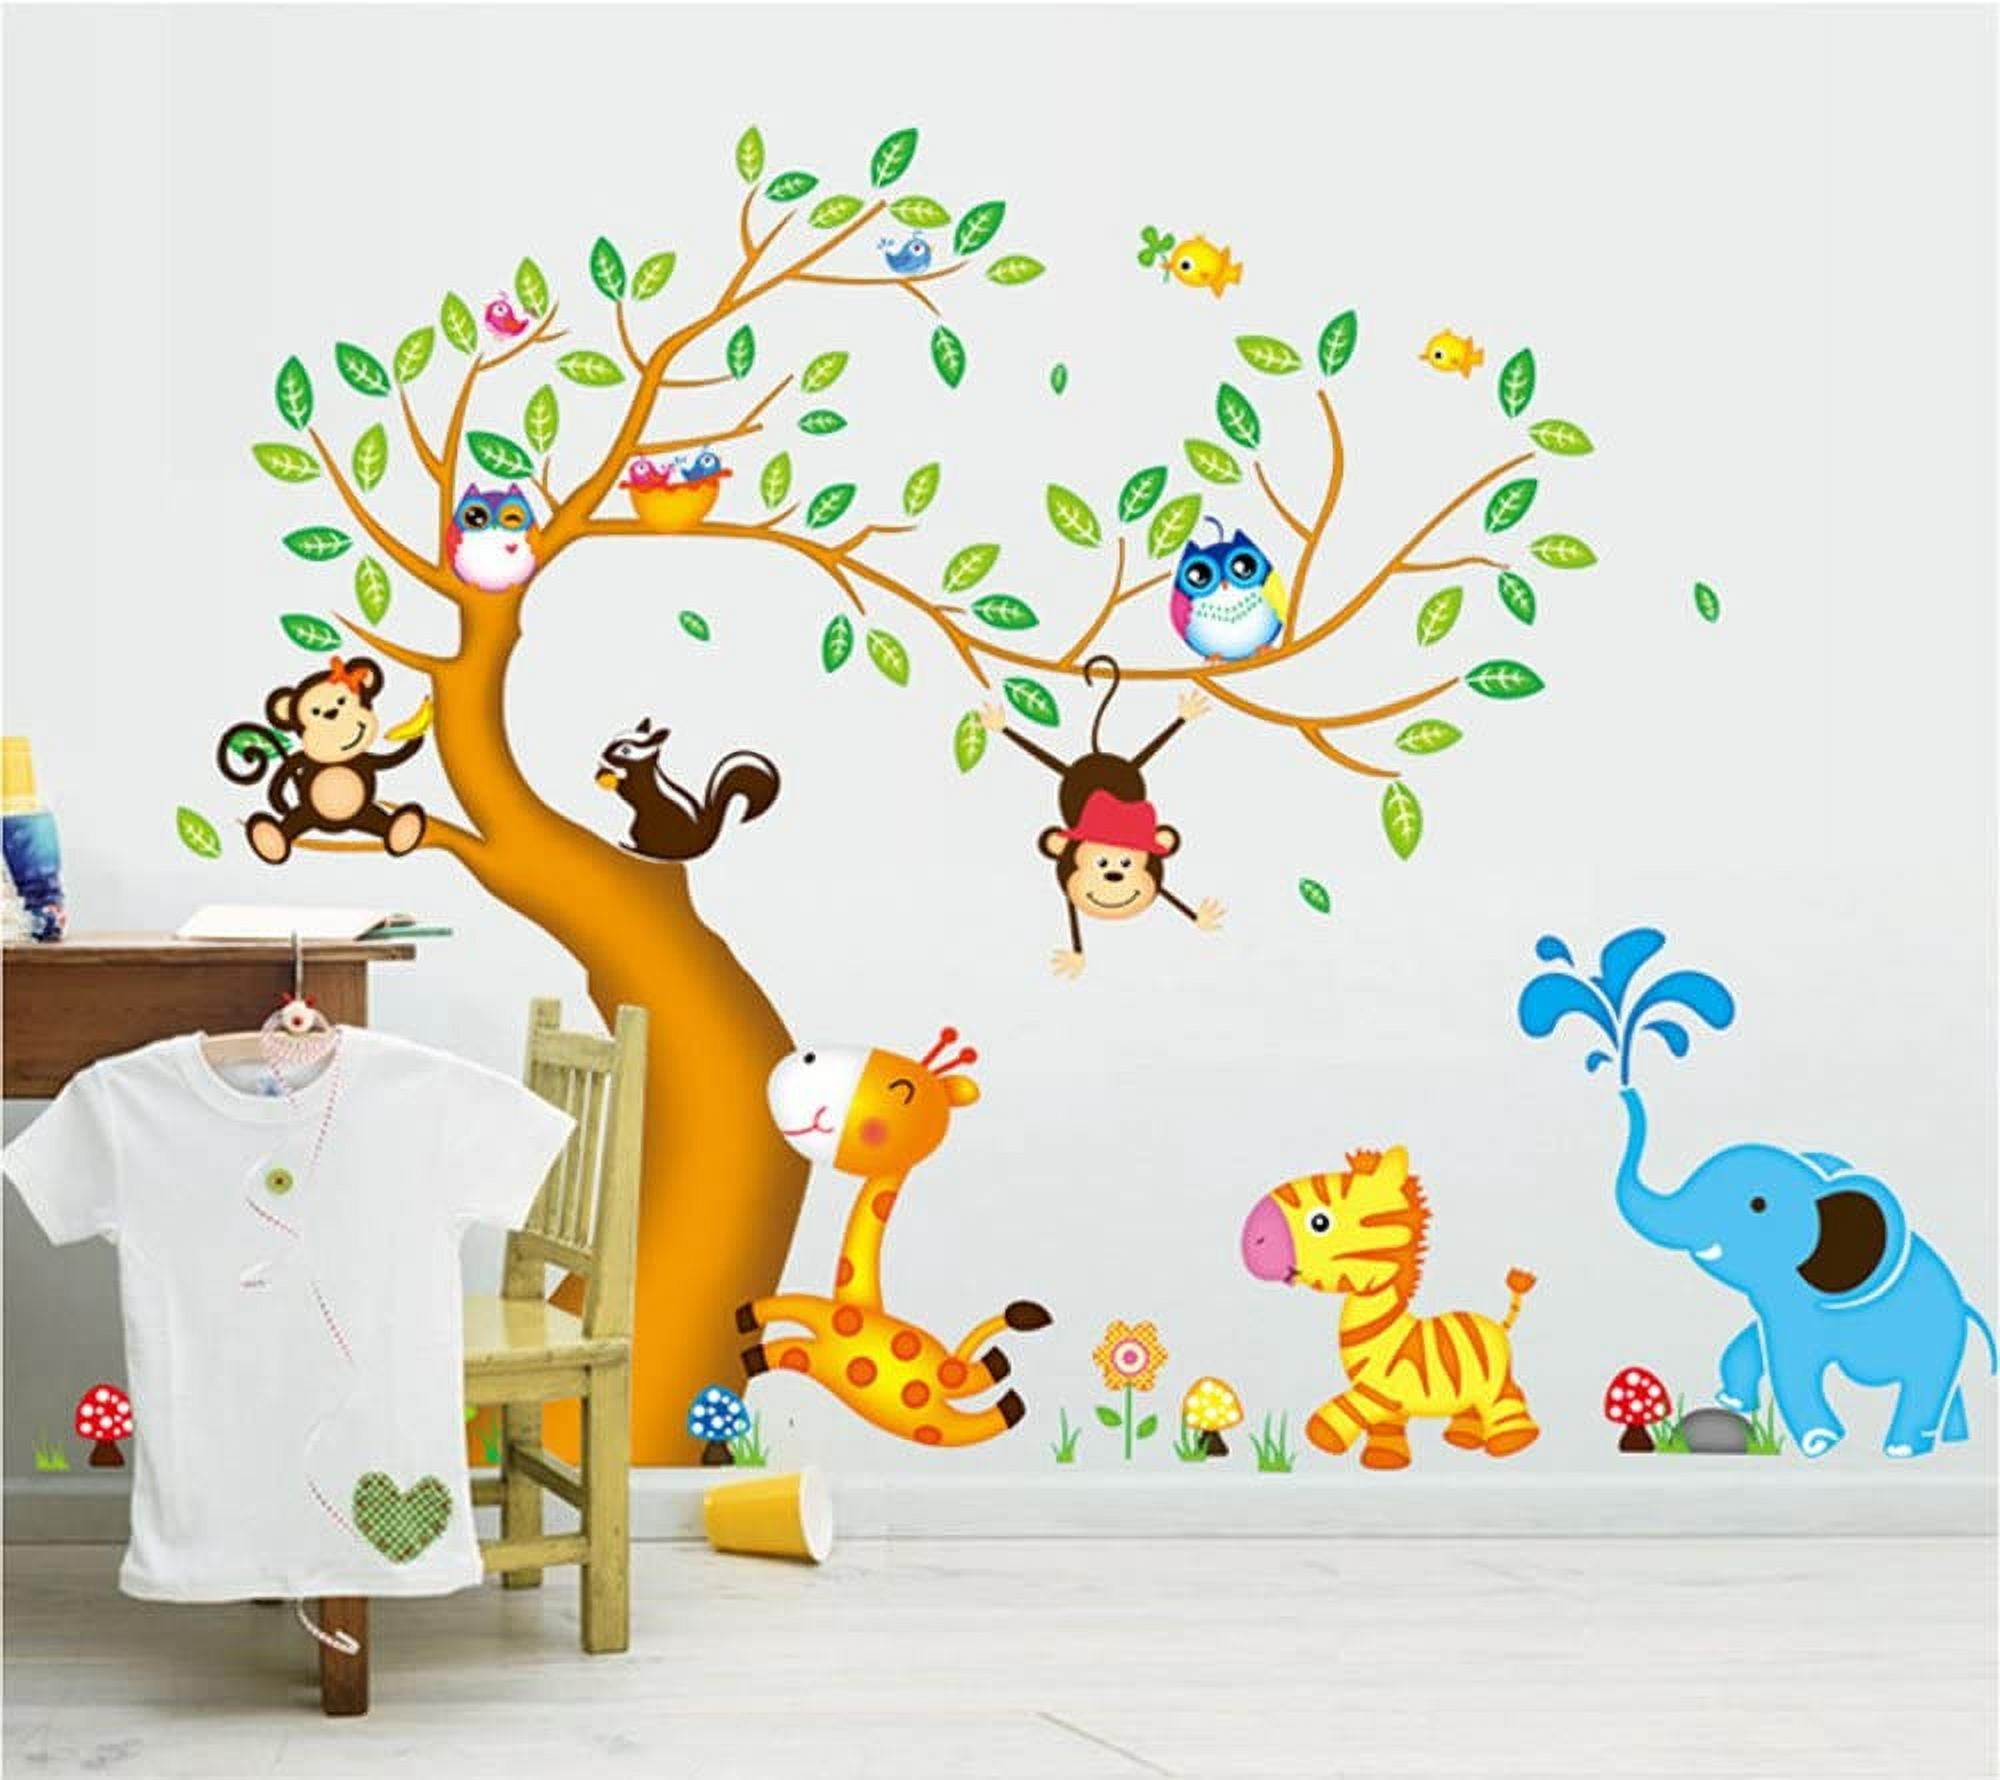 Cartoon Zoo Giraffe Owl Birds Tree Wall Sticker Kids Bedroom Decor Vinyl Decals 